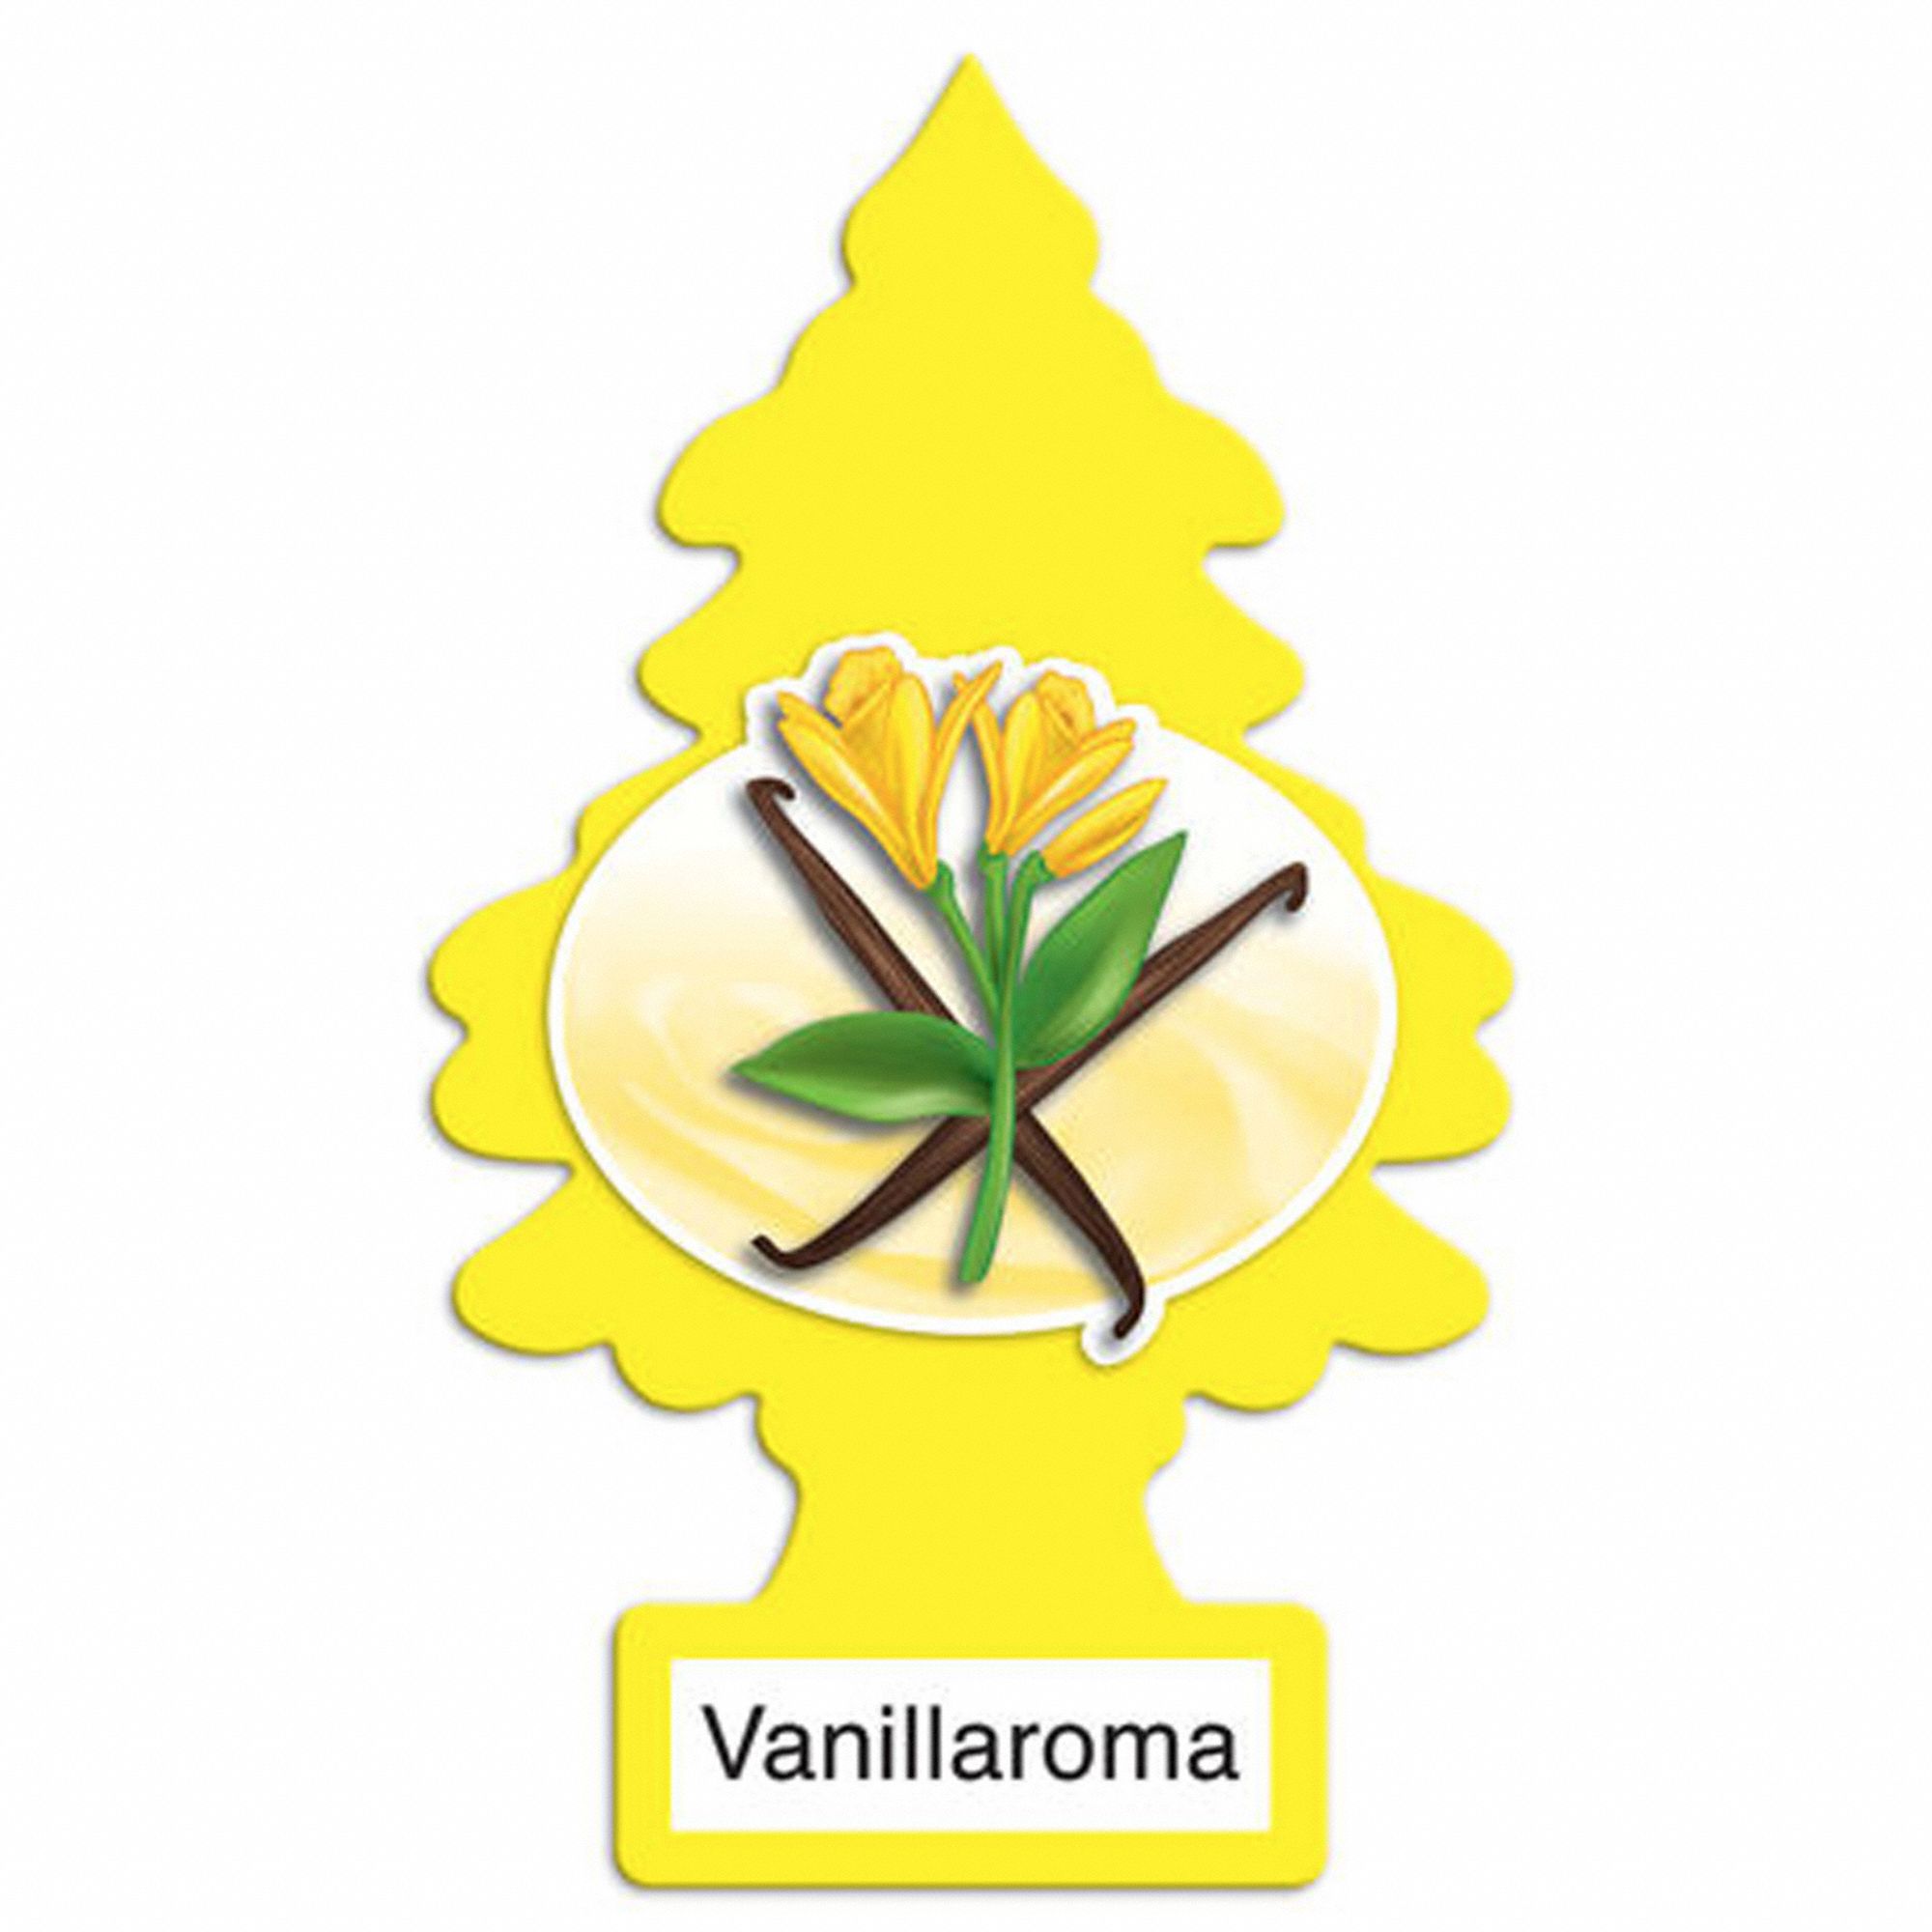 Air Freshener: Vanilla, Yellow, Card with String Air Freshener